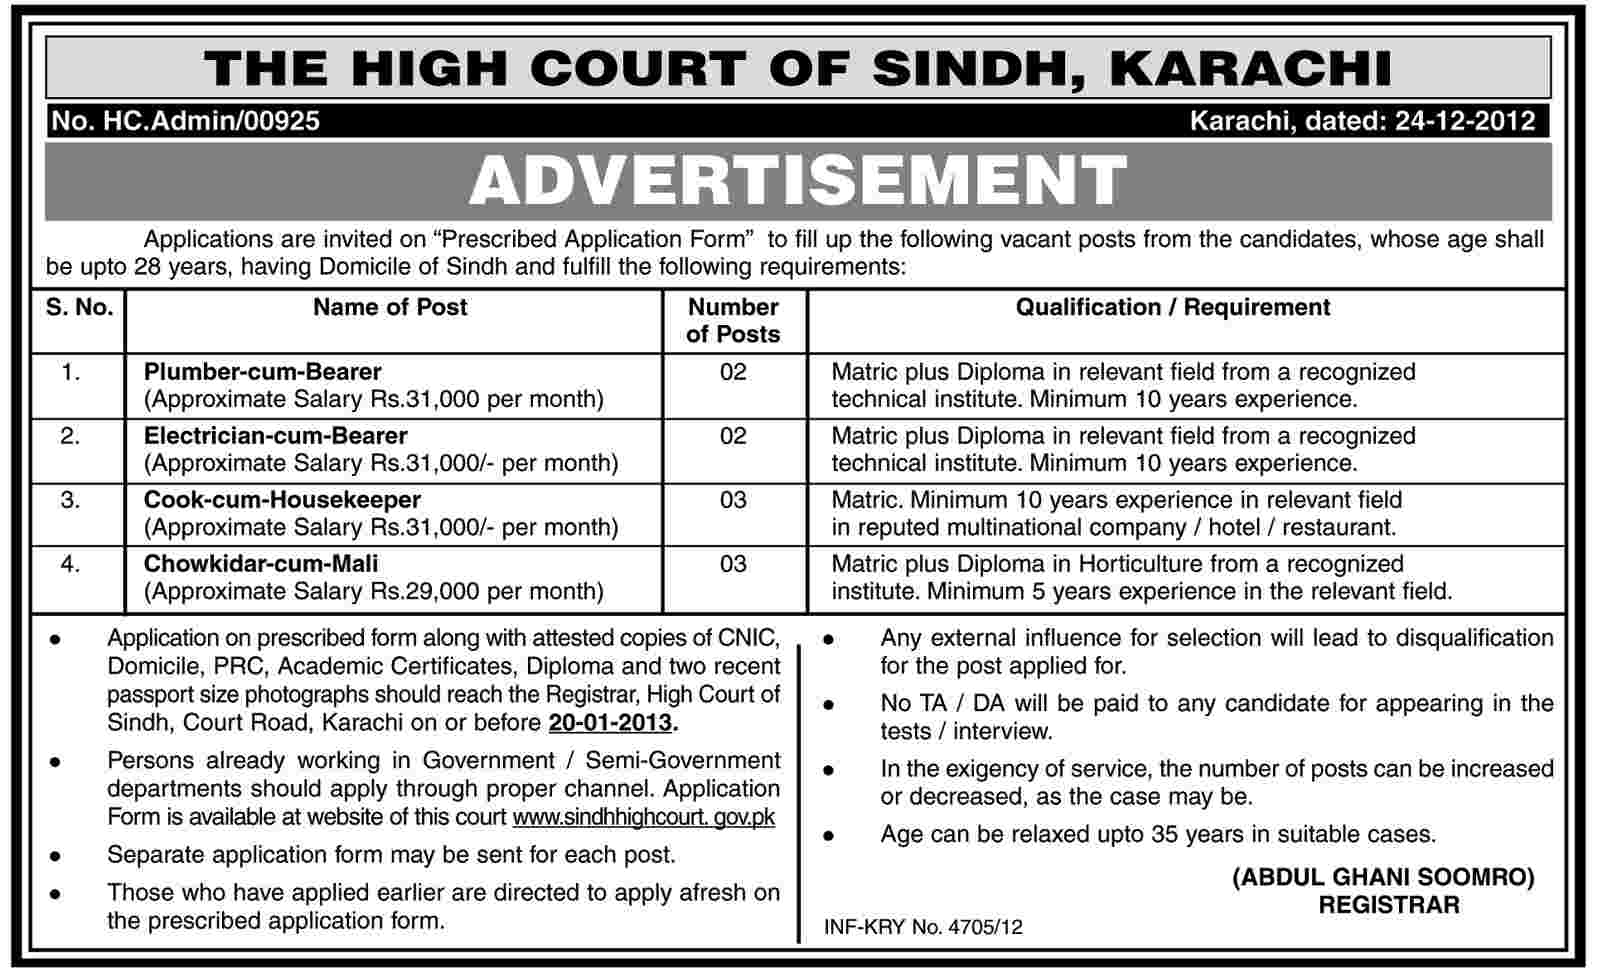 High Court of Sindh Karachi Jobs 2012 December (www.sindhhighcourt.gov.pk)